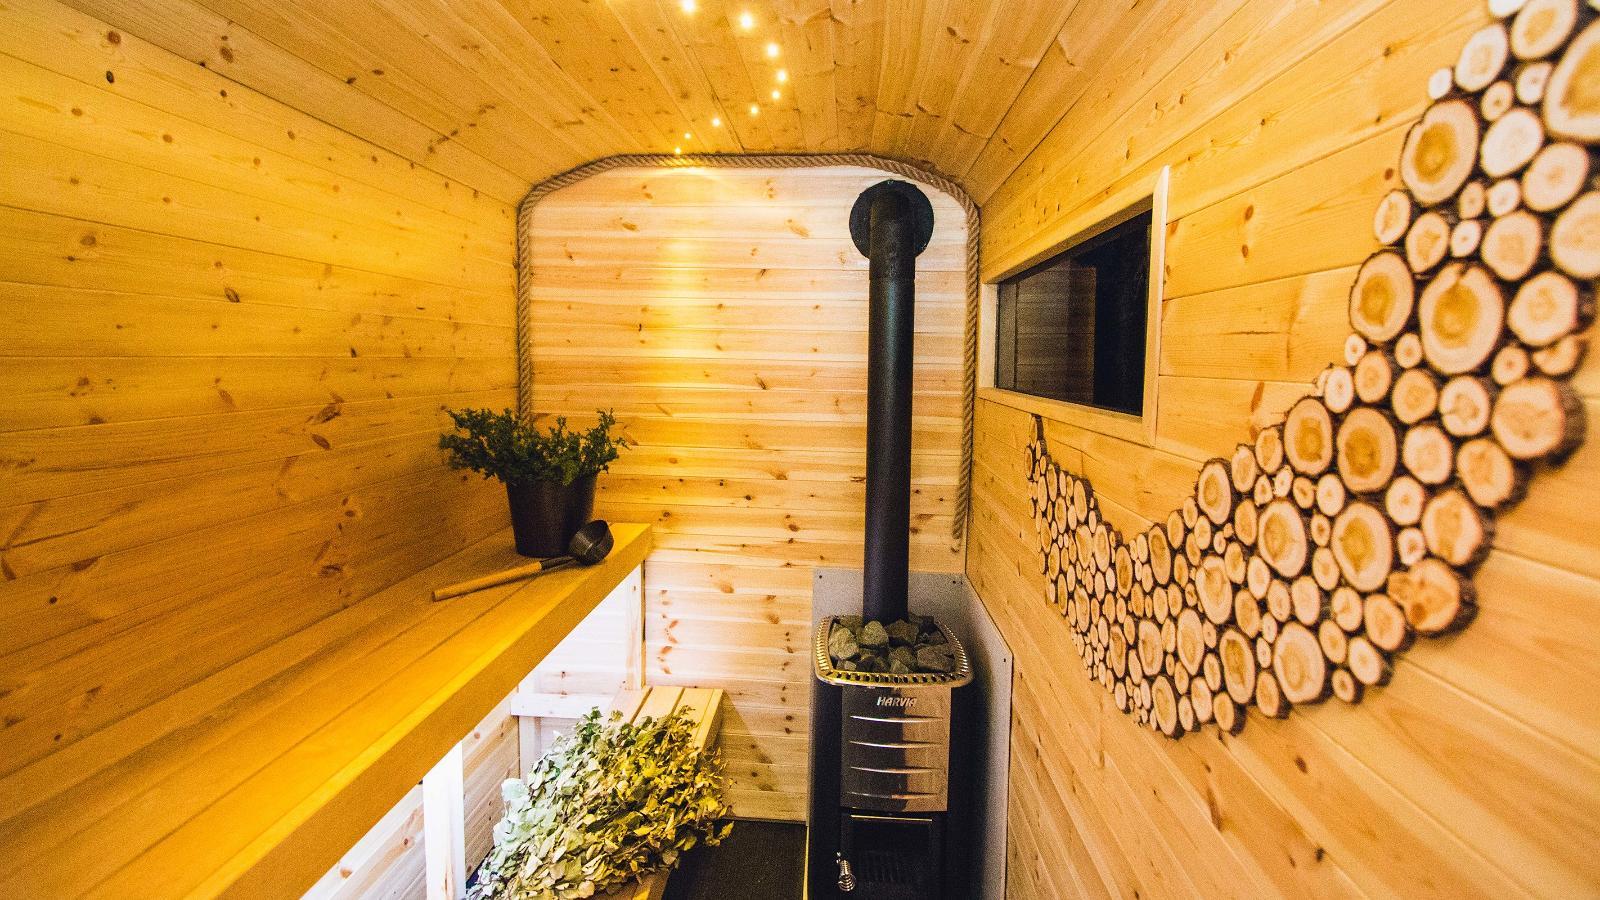 Saunatrip – trailer sauna rental and transport all over Estonia